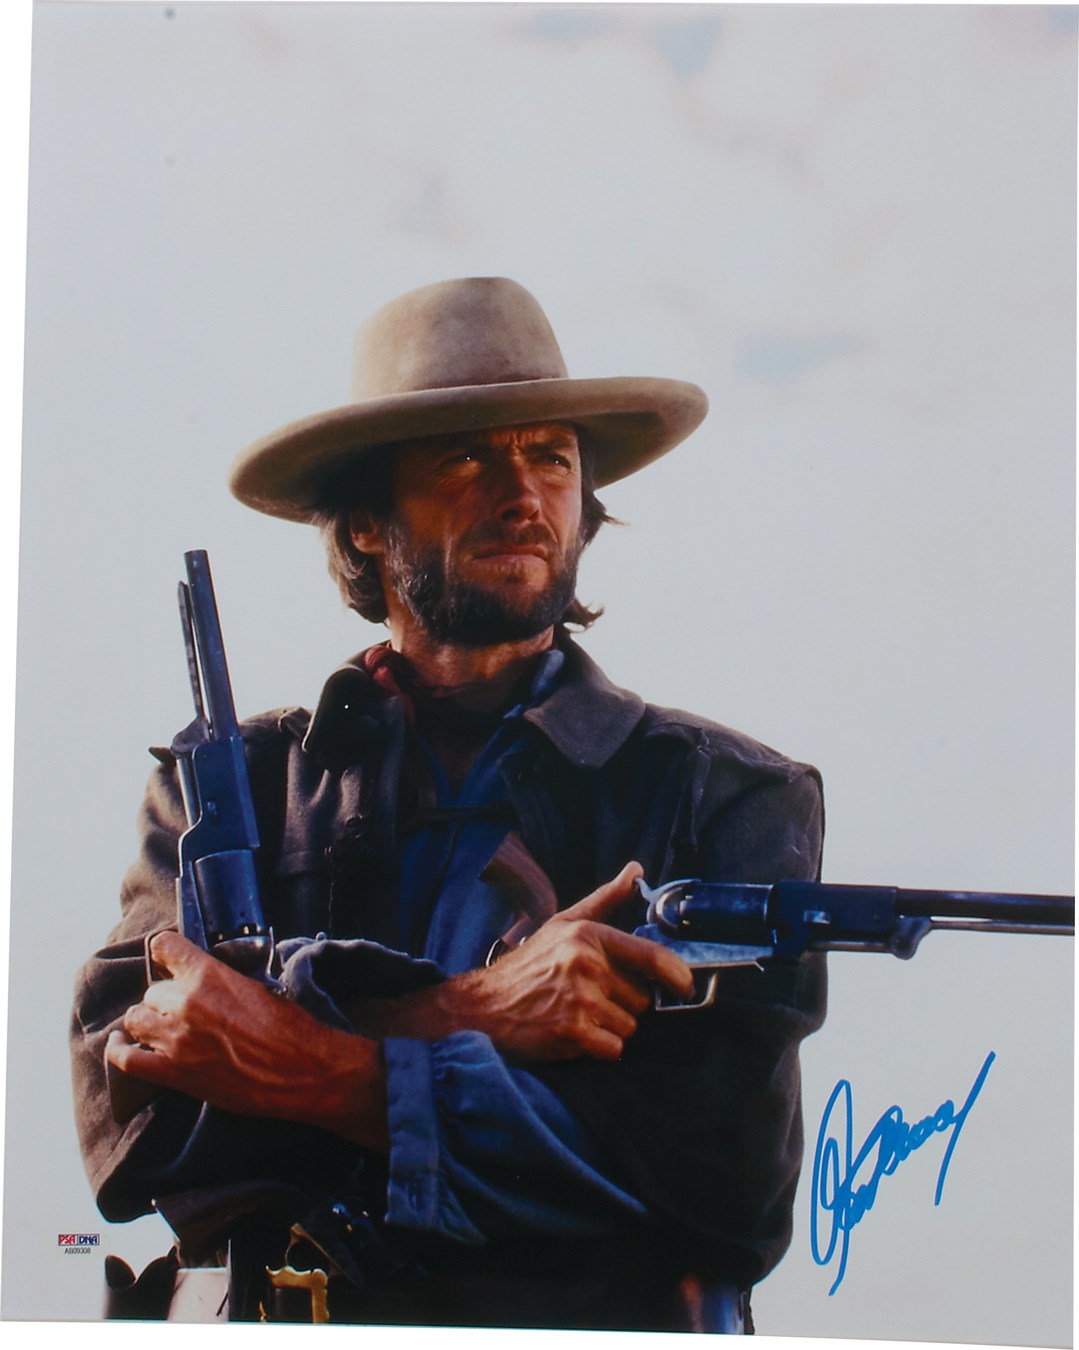 Pop Culture Autographs - Clint Eastwood 16x20" "Outlaw Josey Wales" Signed Photograph (PSA/DNA)